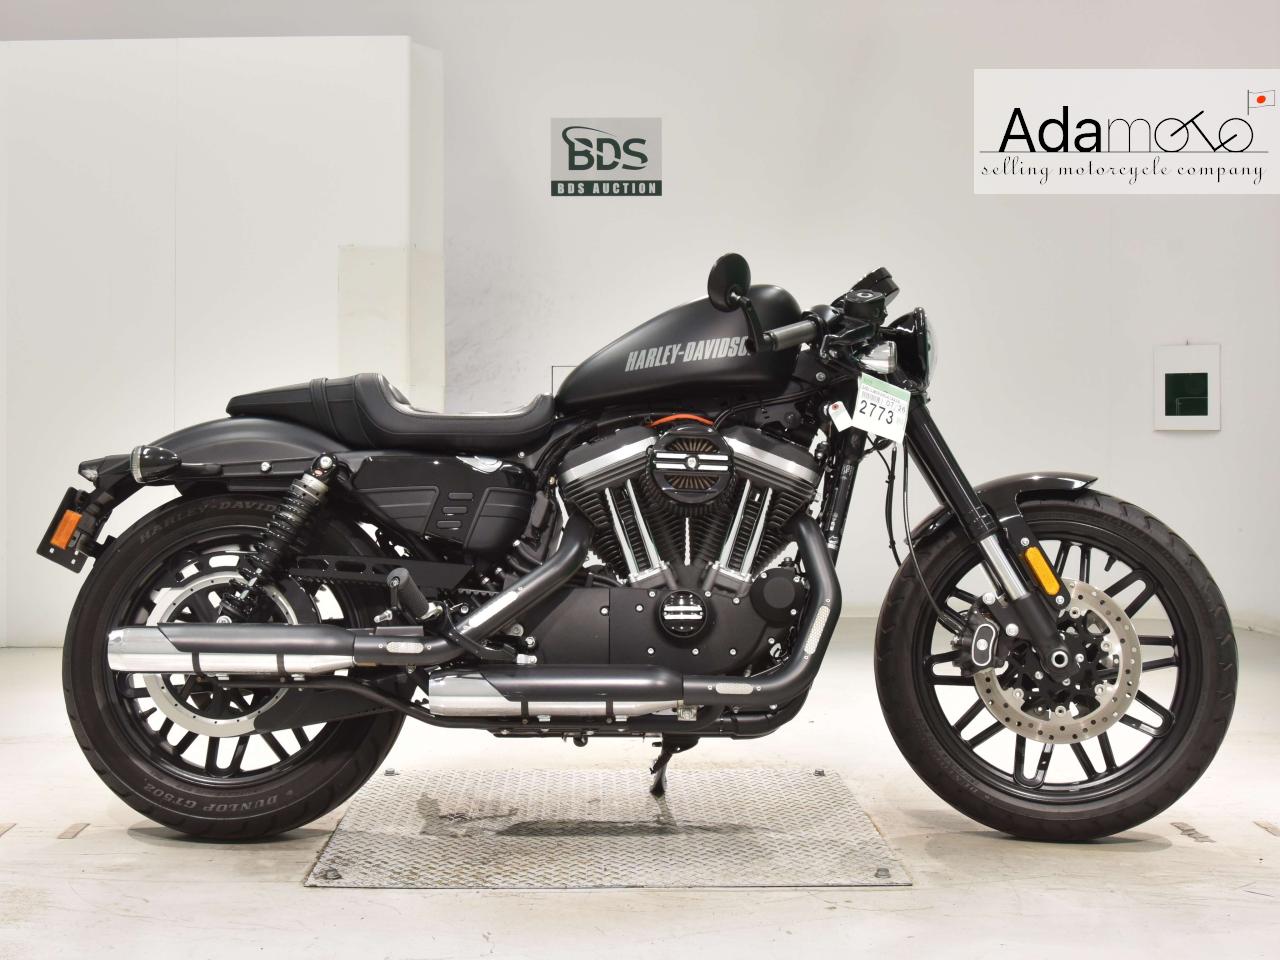 Harley Davidson XL1200CX - Adamoto - Motorcycles from Japan